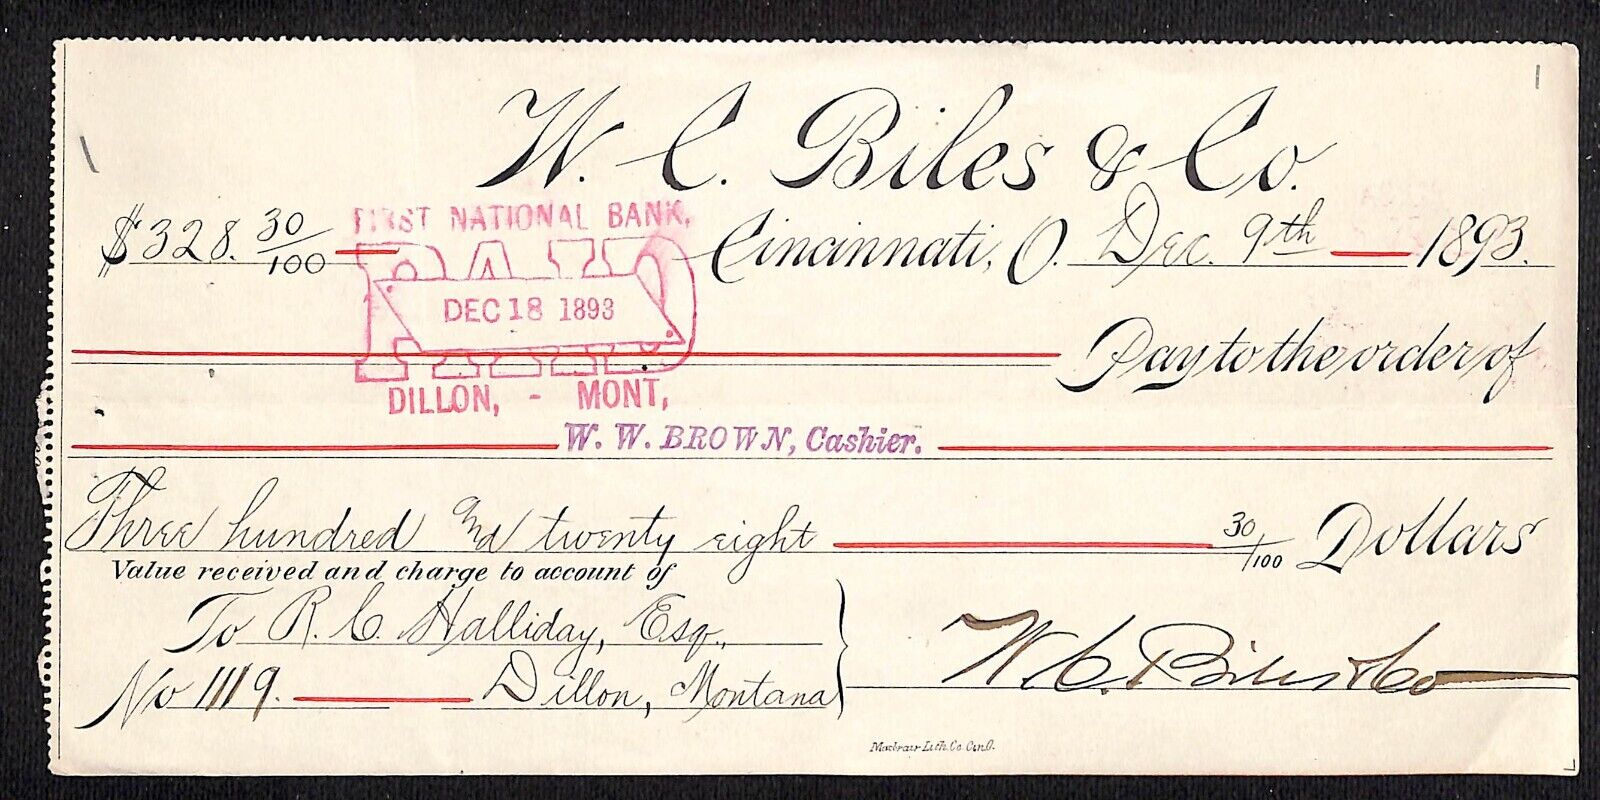 1893 Cincinnati Bank Check W. C. Biles & Co. Large / Scarce